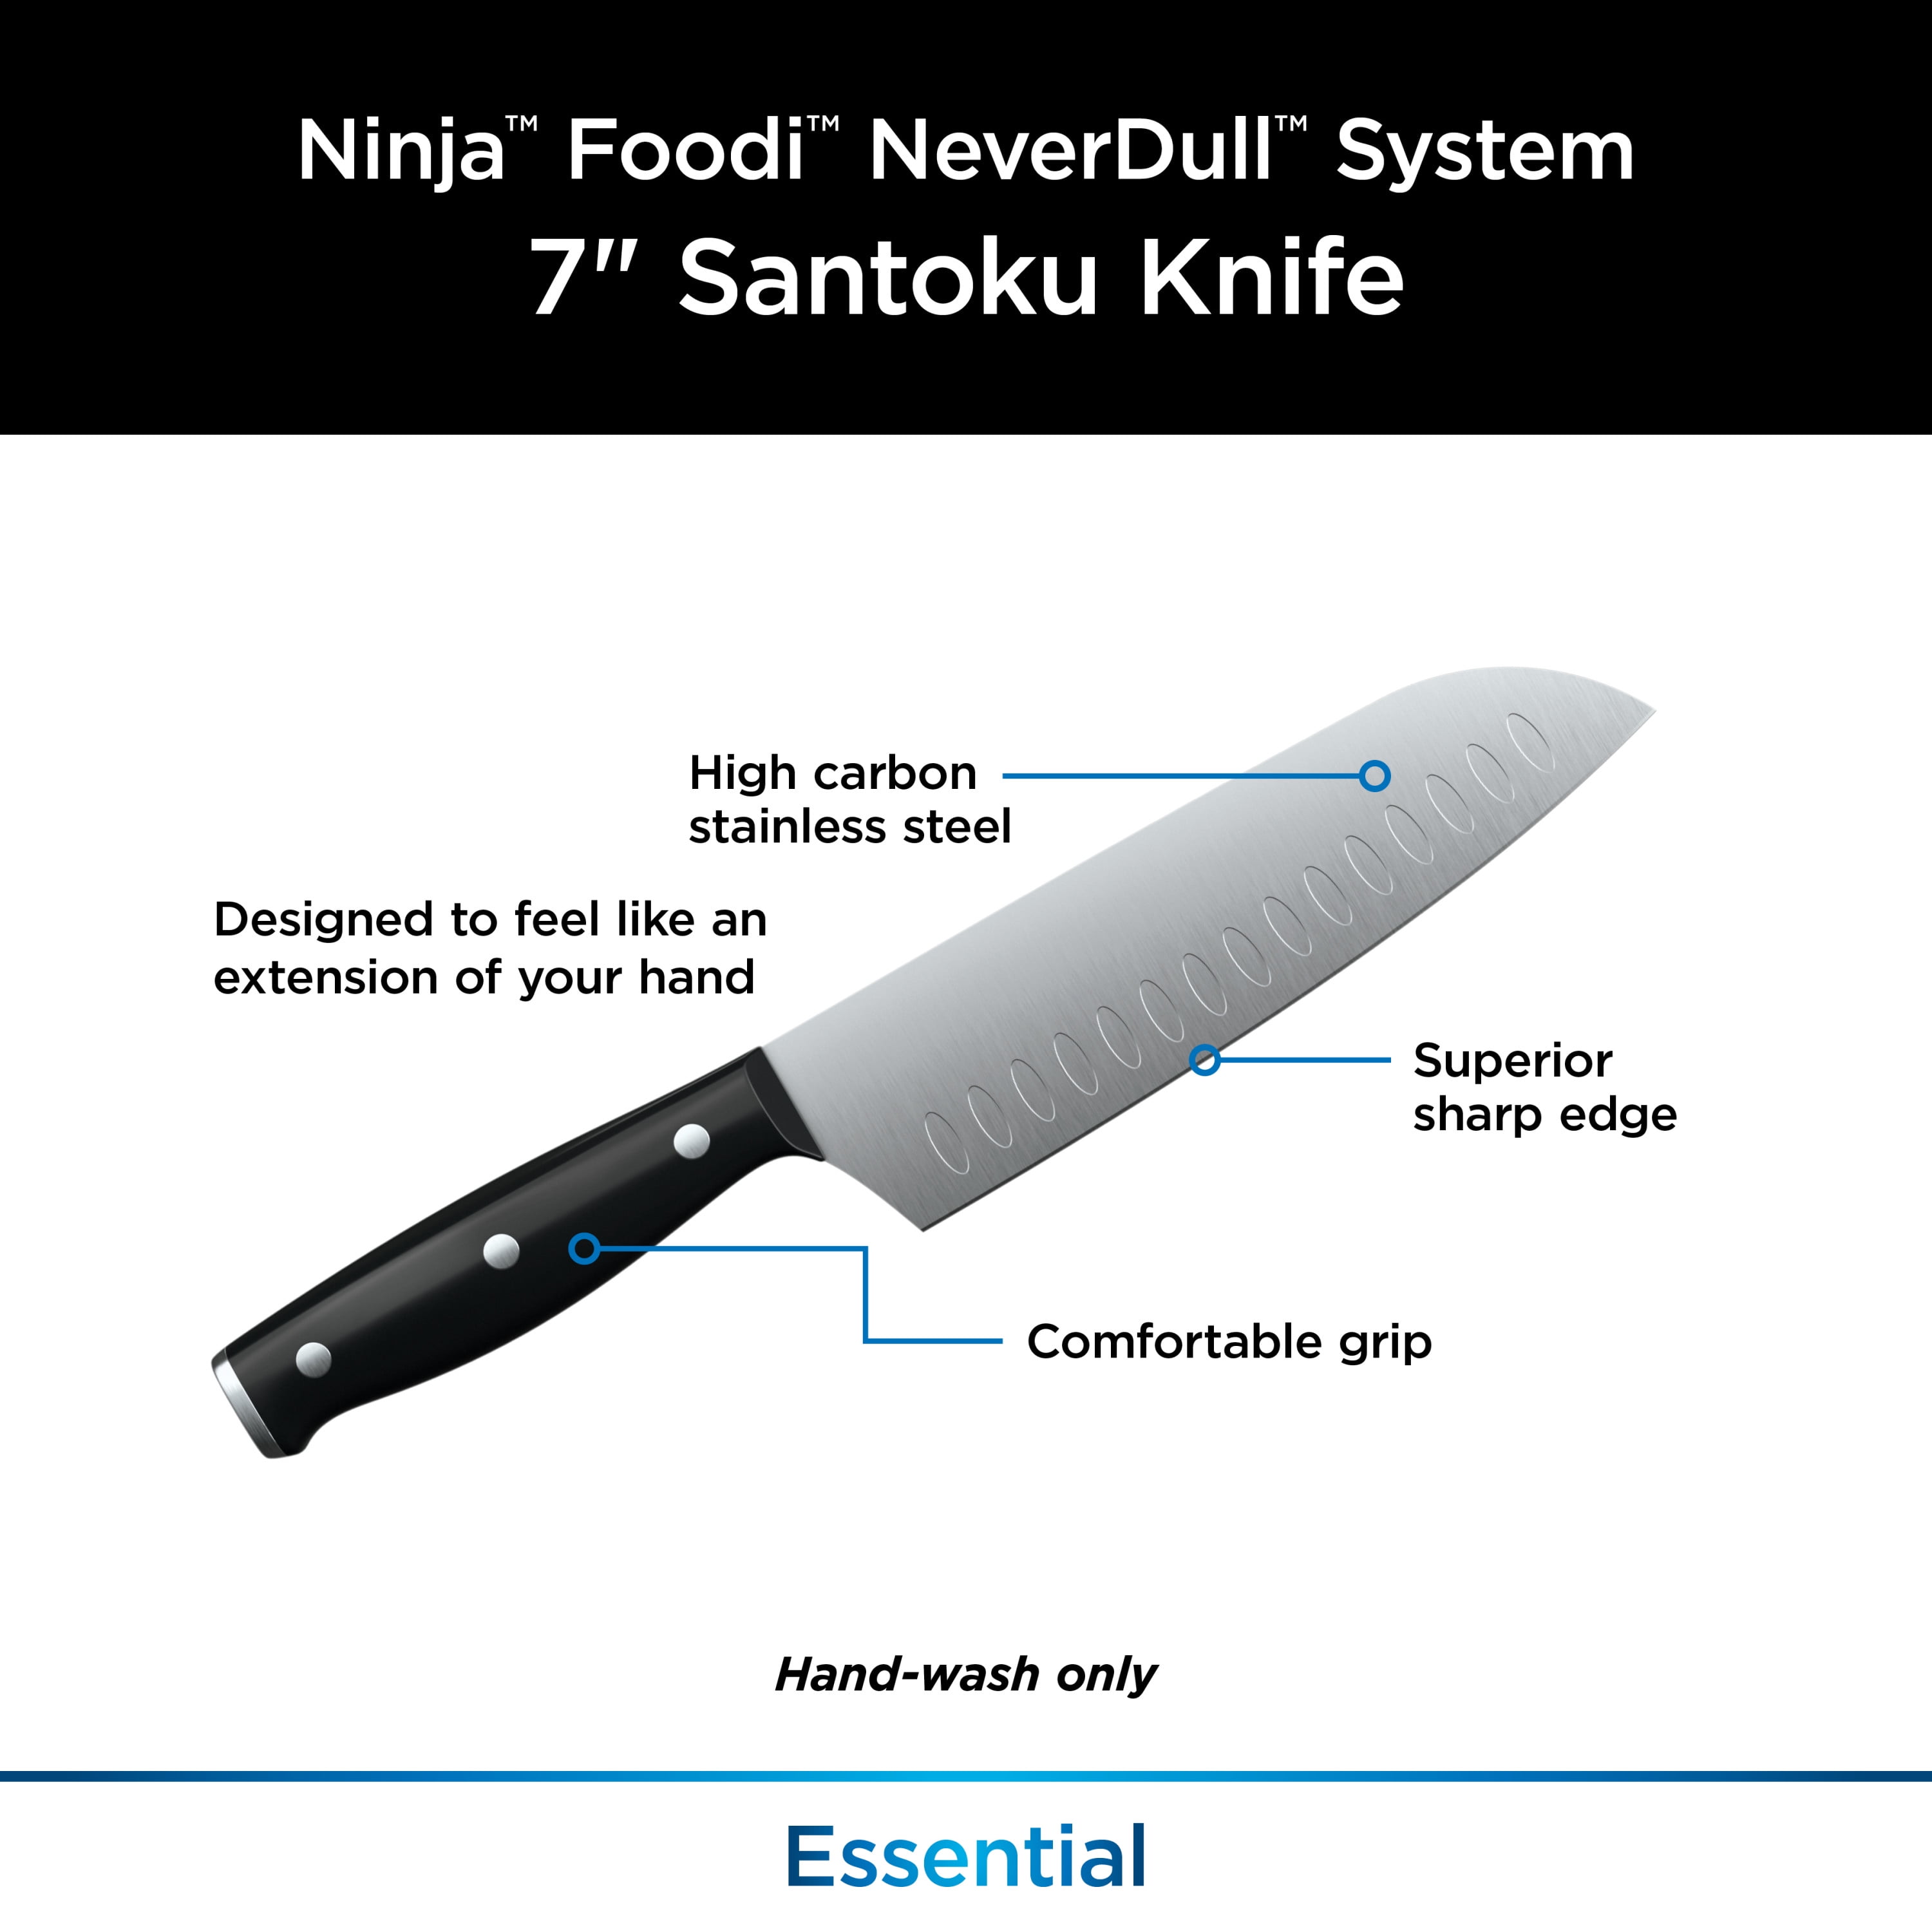  Ninja K30118 Foodi NeverDull System 7-Inch Santoku